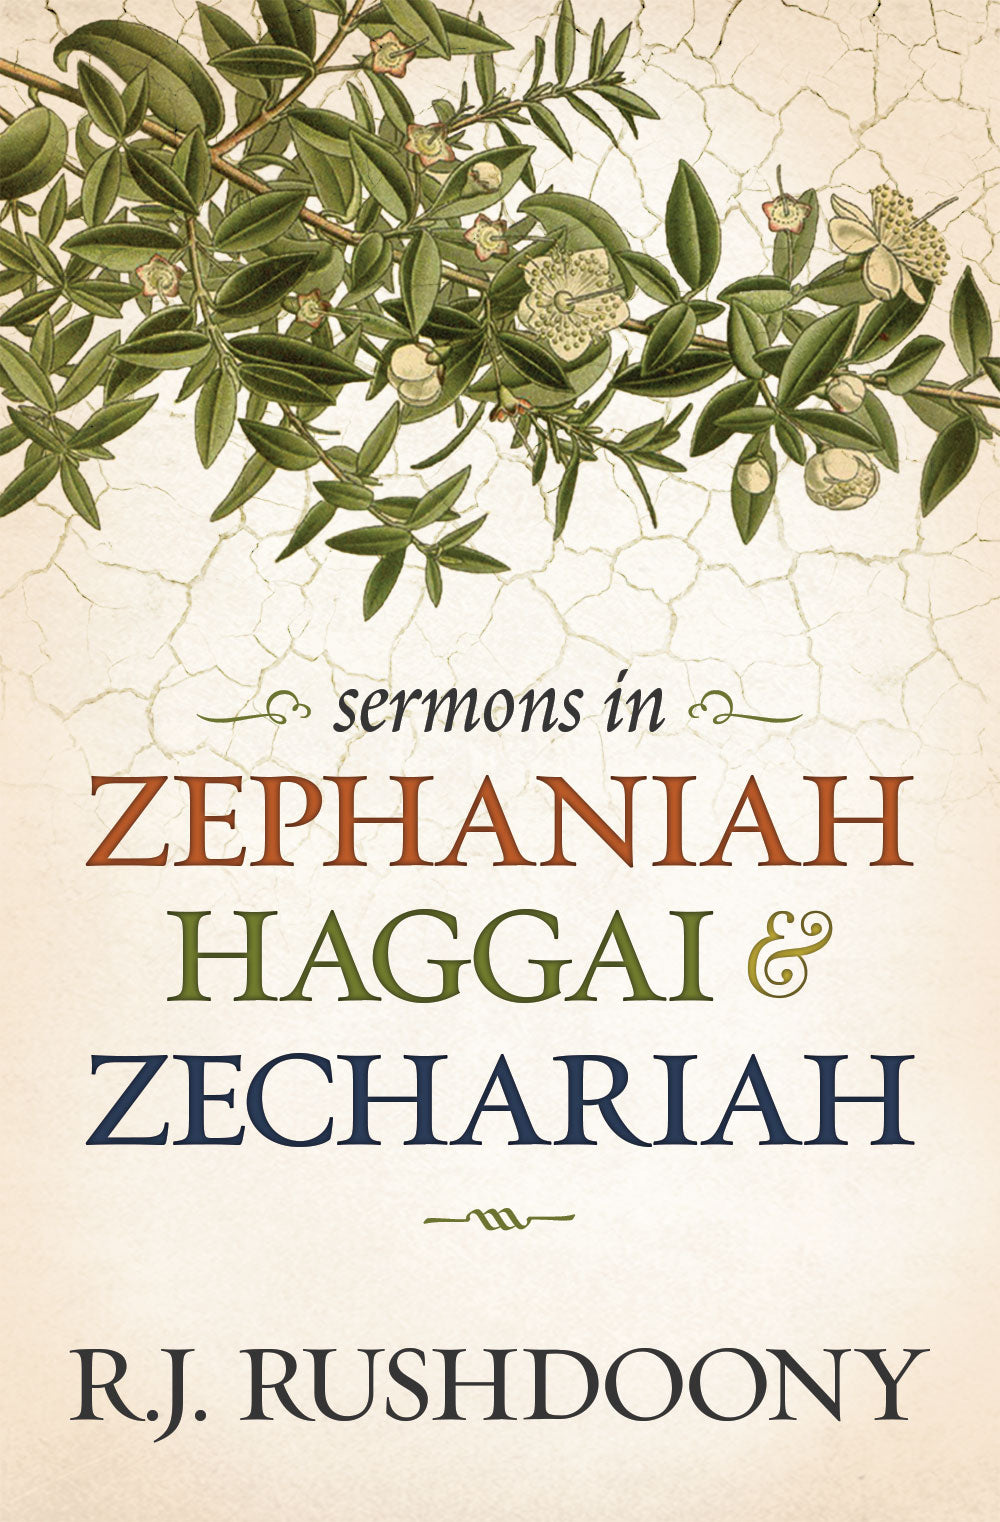 Sermons in Zephaniah, Haggai, & Zechariah is now available!